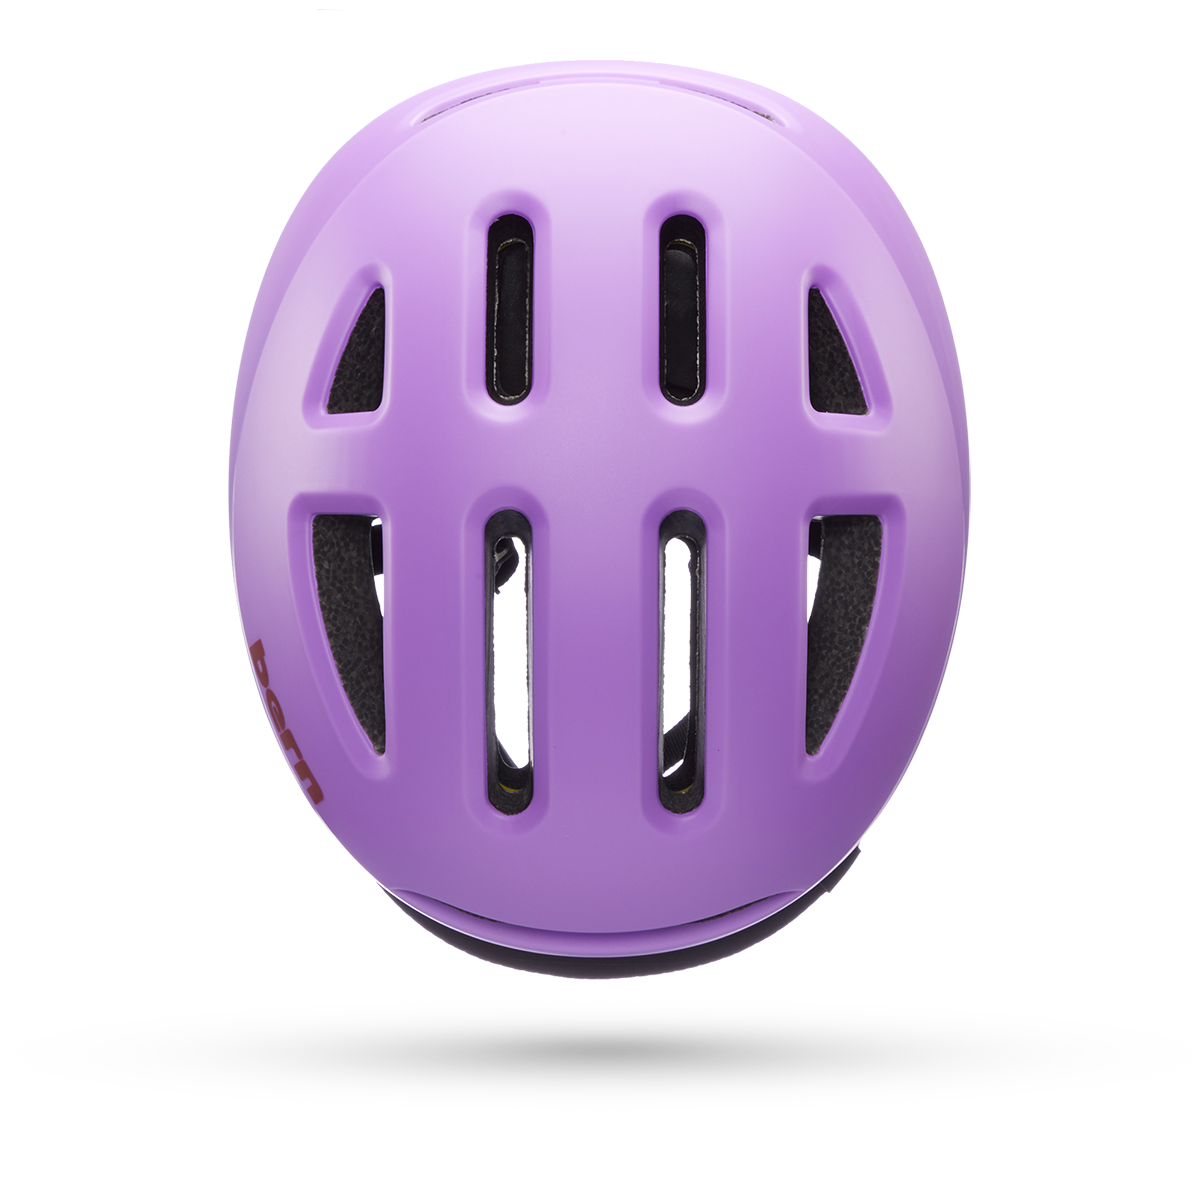 Major MIPS Bike Helmet (Barn Deal)